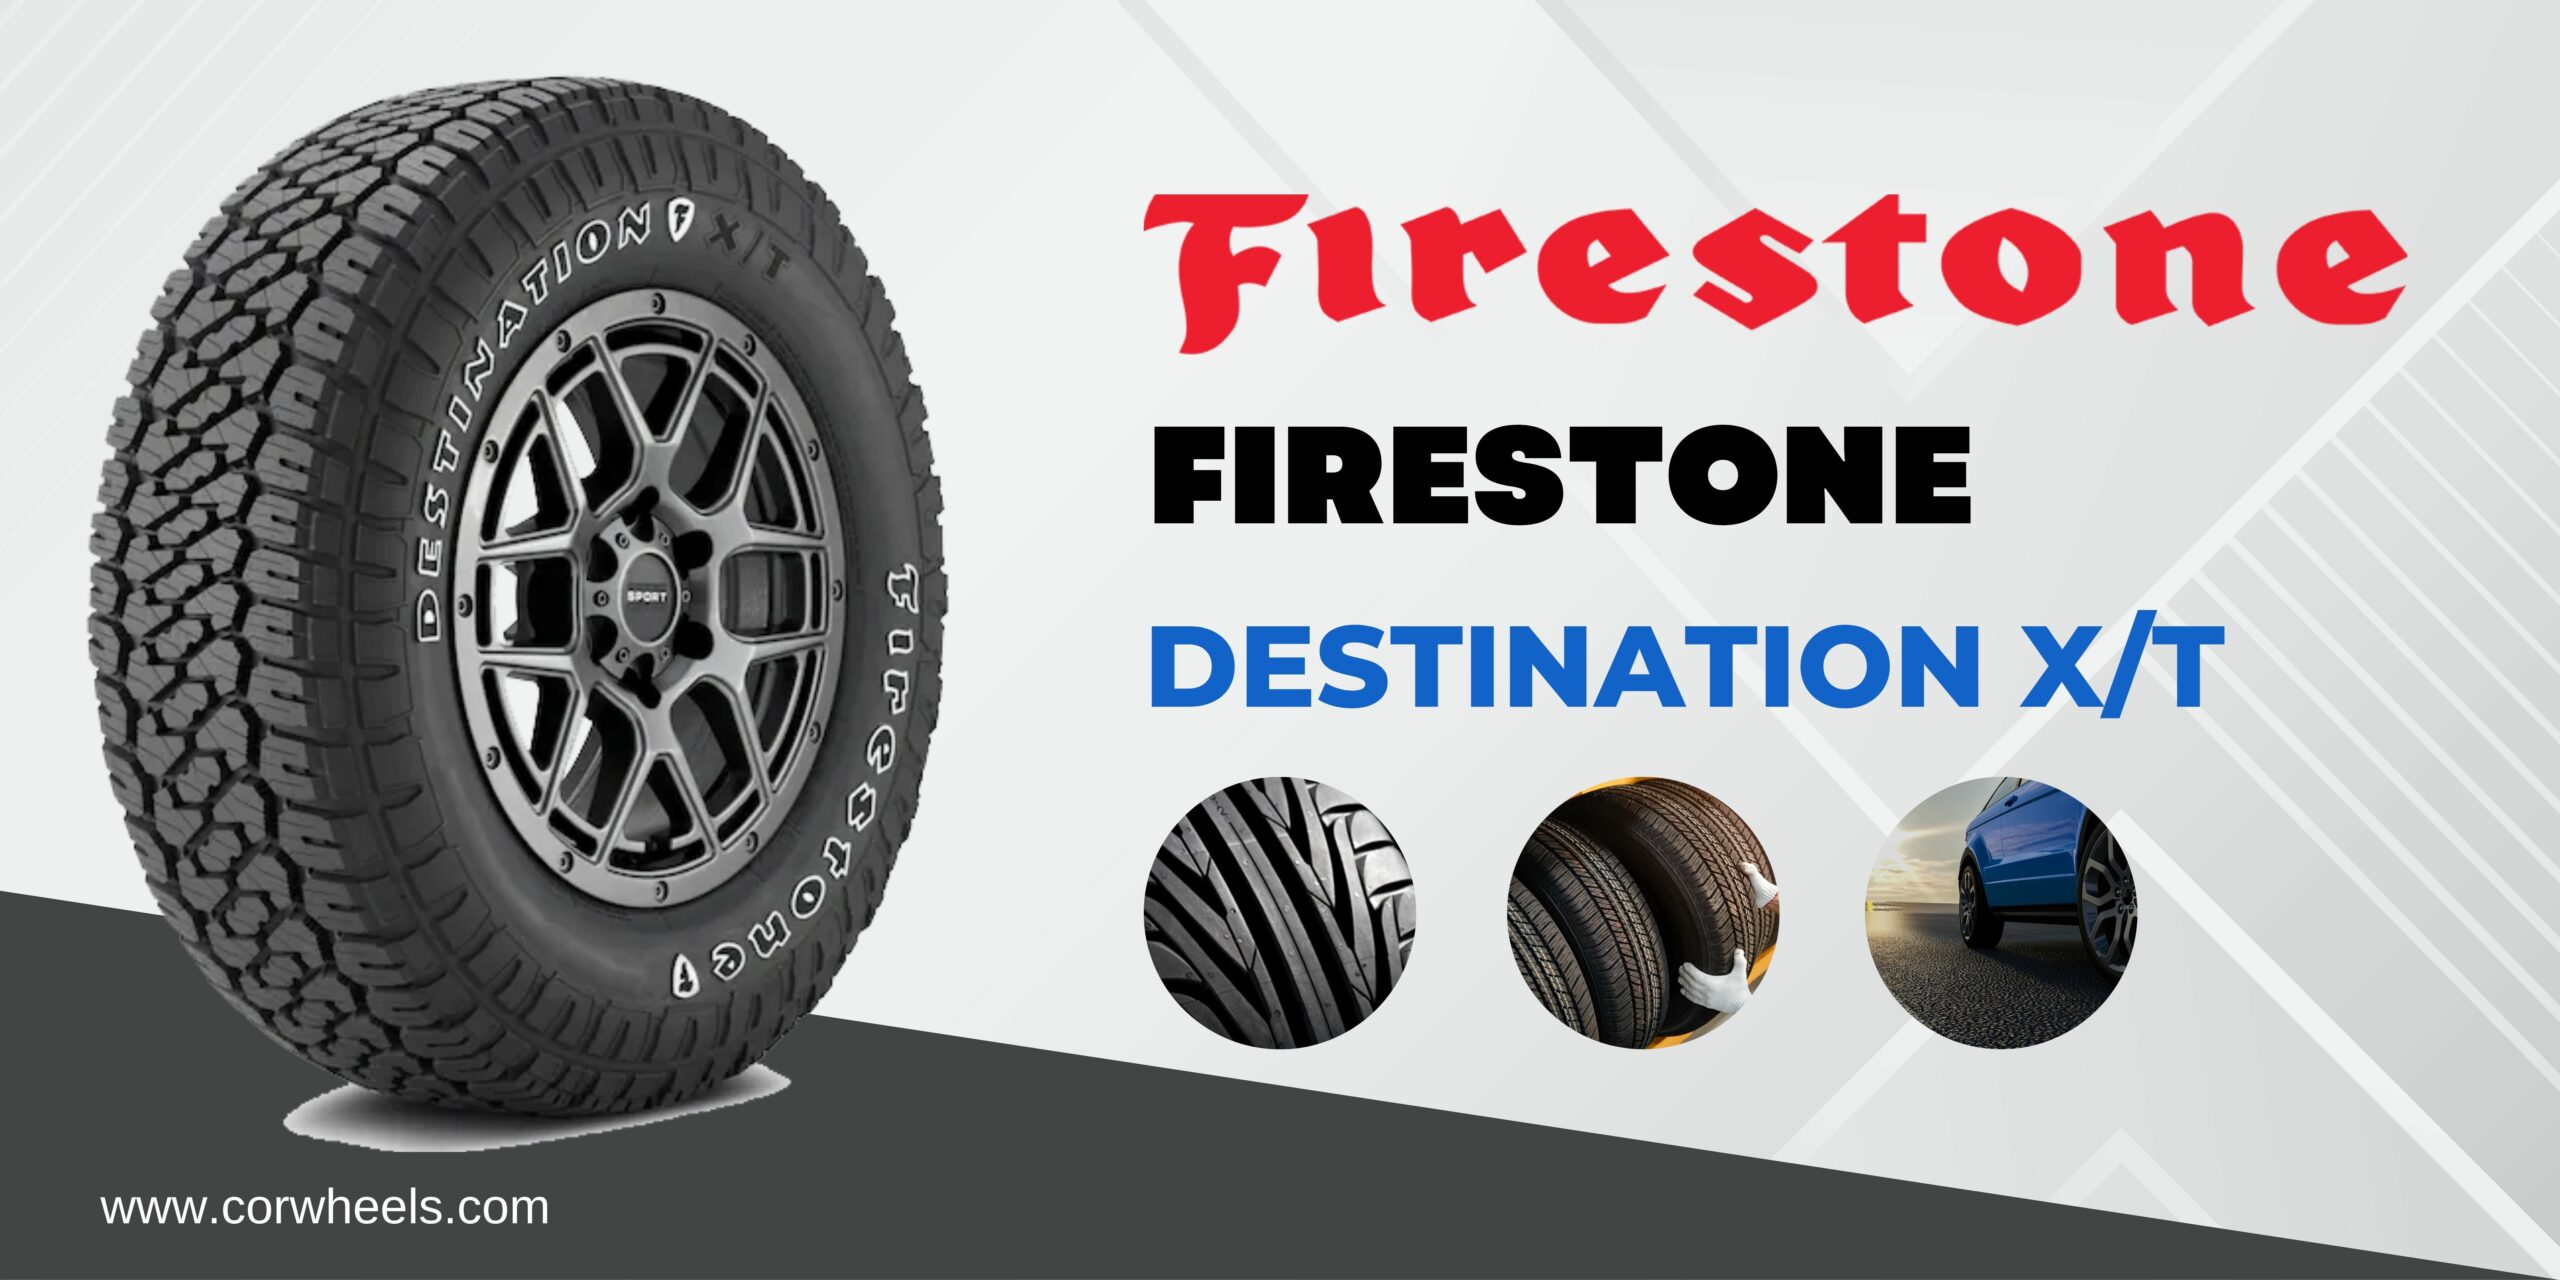 Firestone Destination XT Review